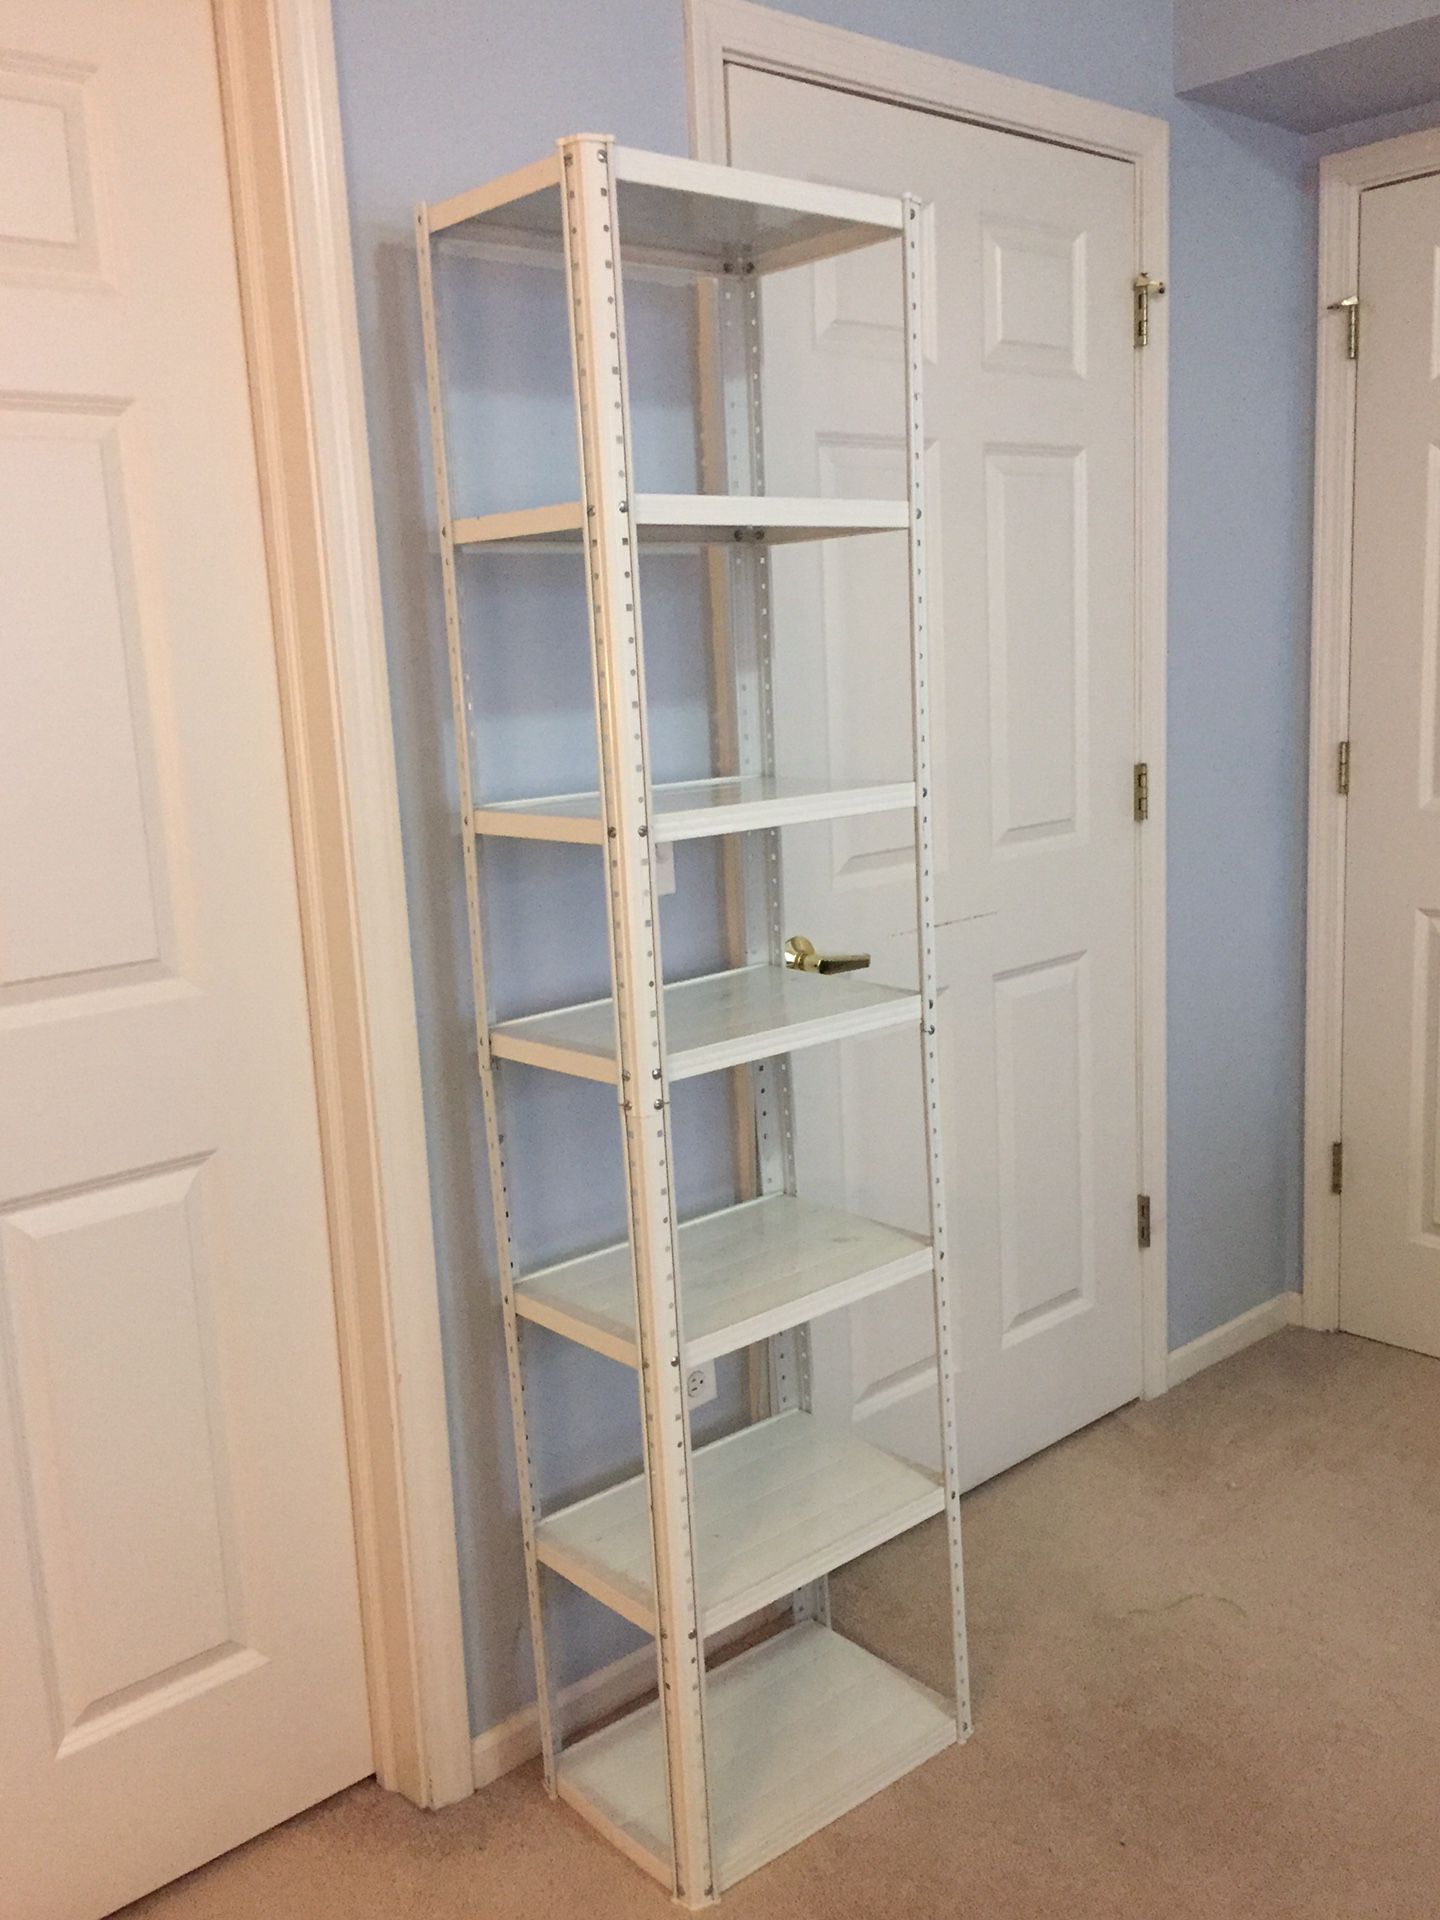 7 rack storage closet organizer